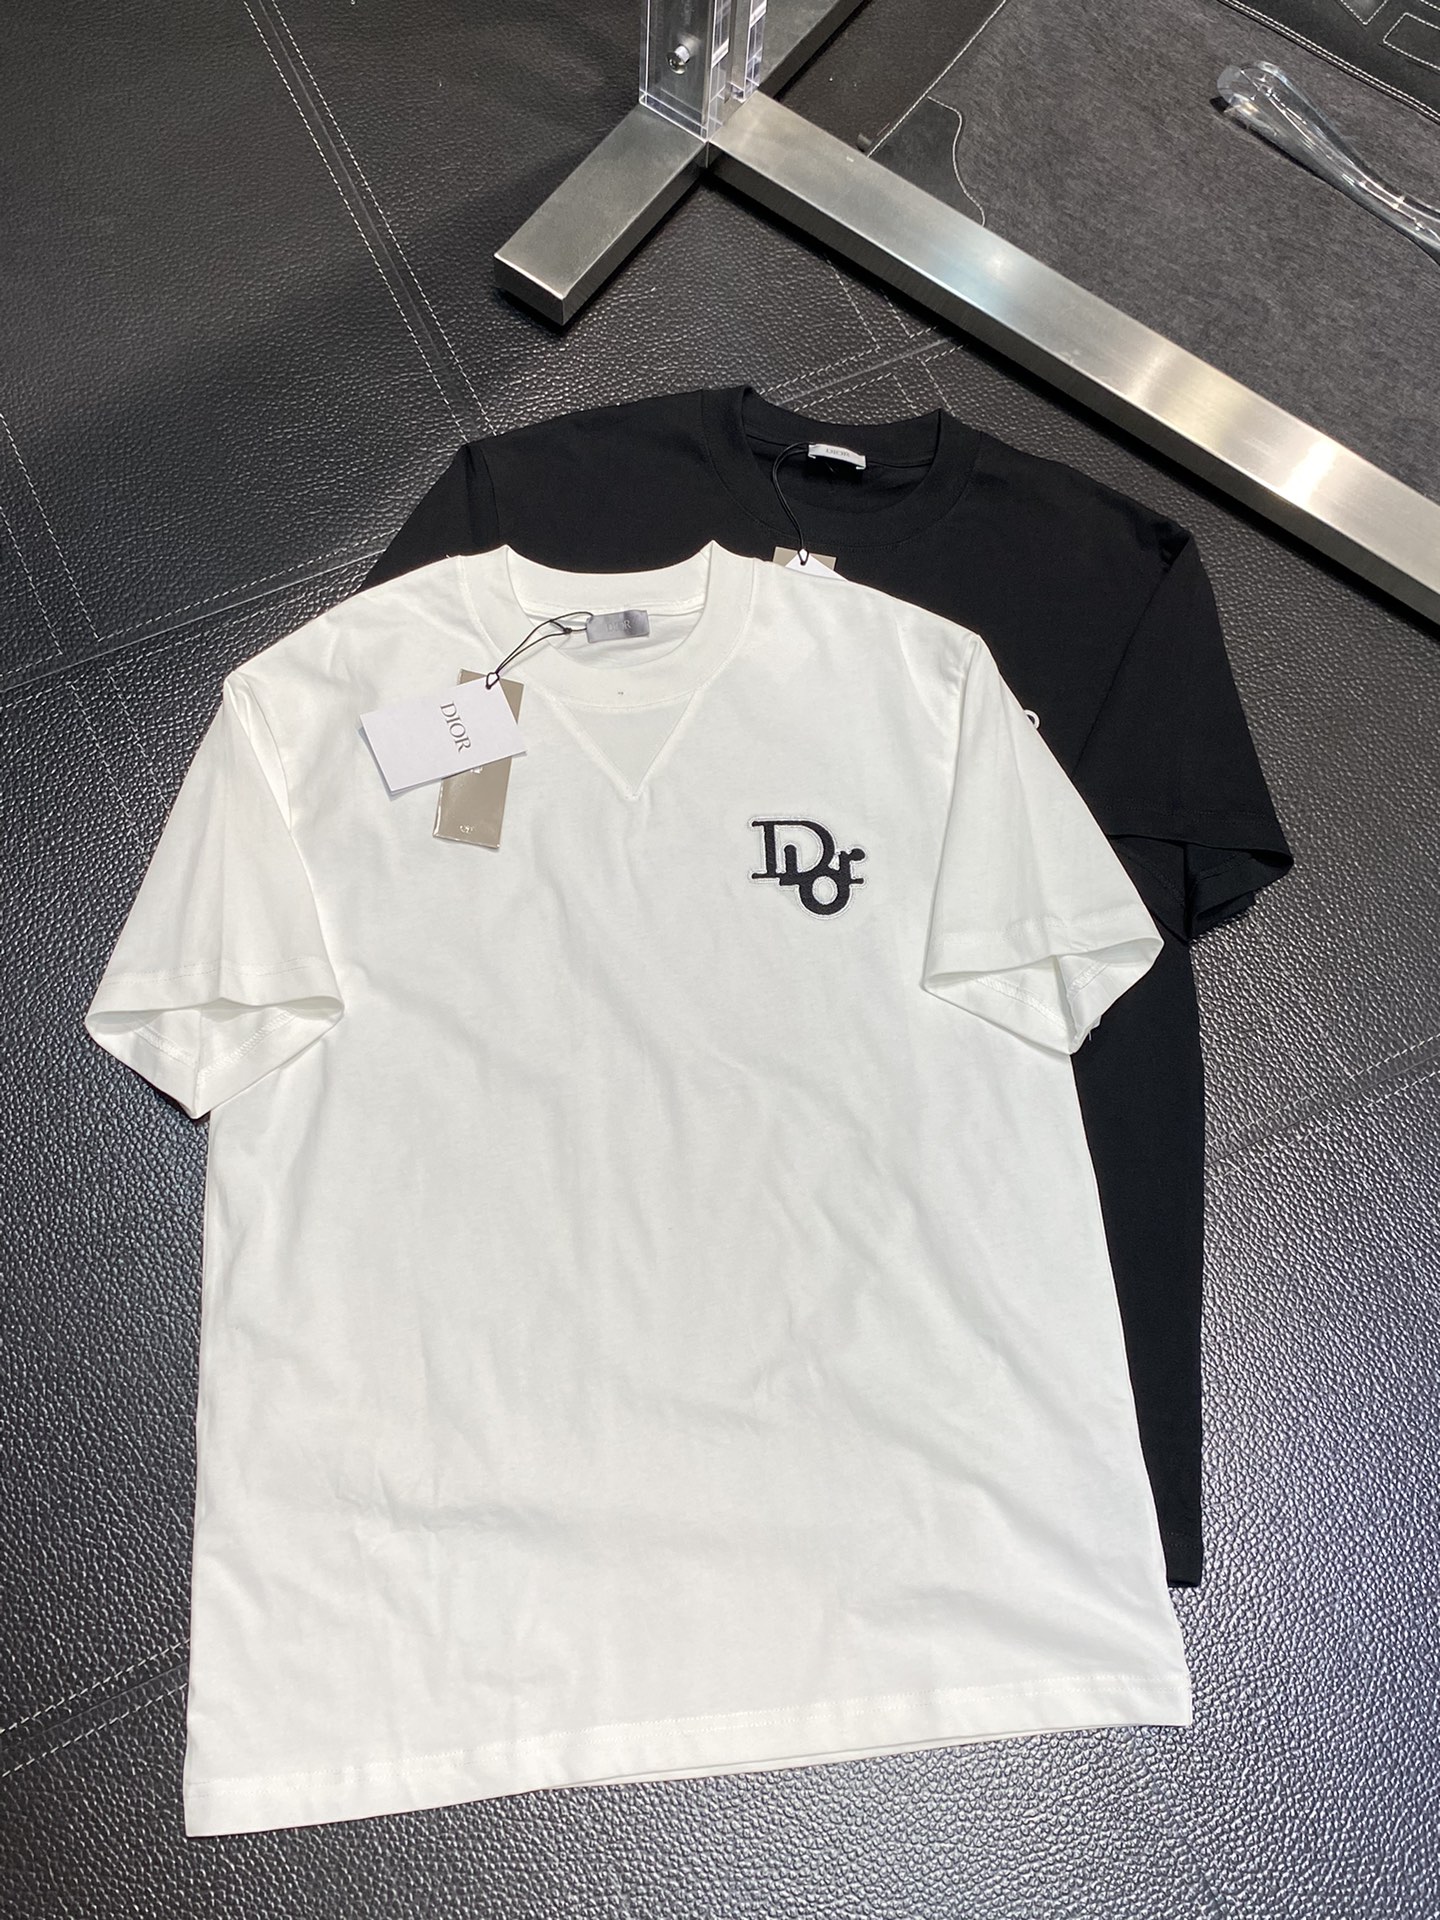 Dior 1:1
 Clothing T-Shirt Men Fashion Short Sleeve